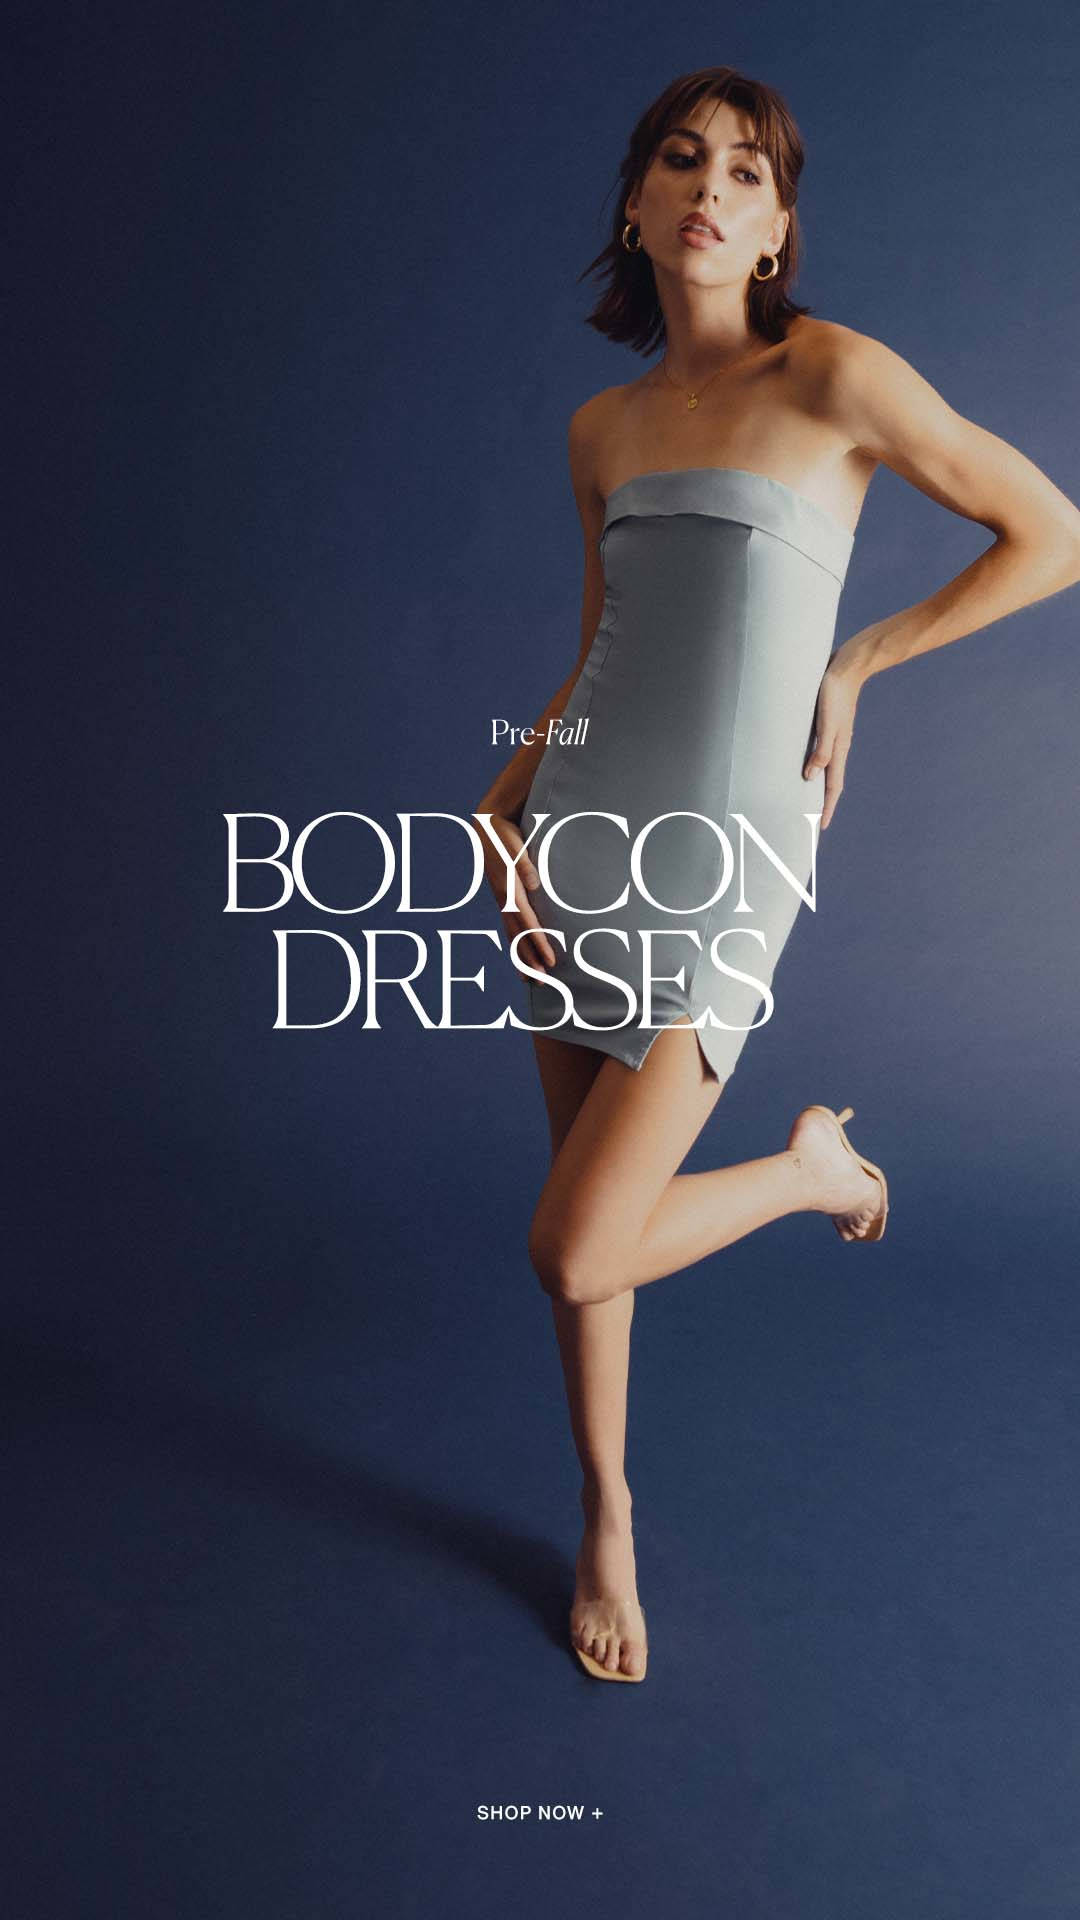 Bodycon Dresses - Wardrobe Staples.